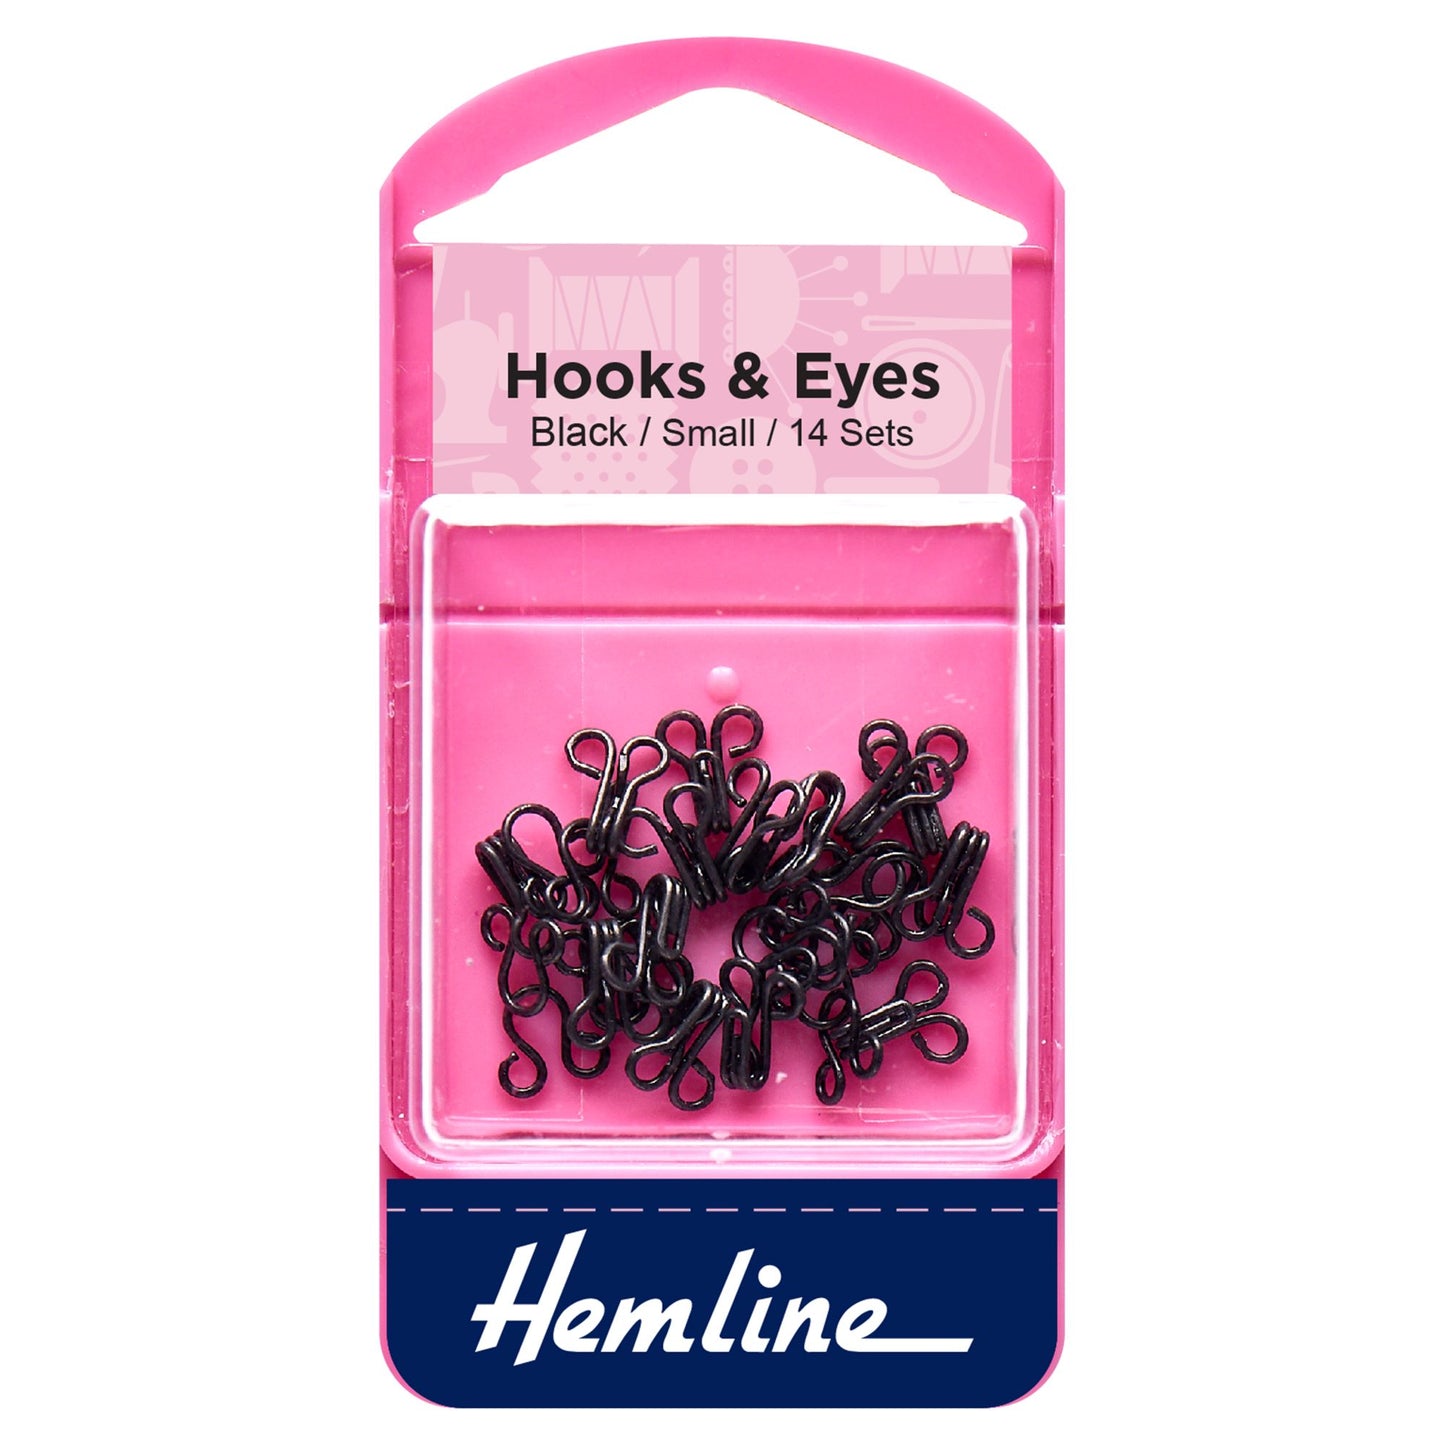 Hooks & Eyes black